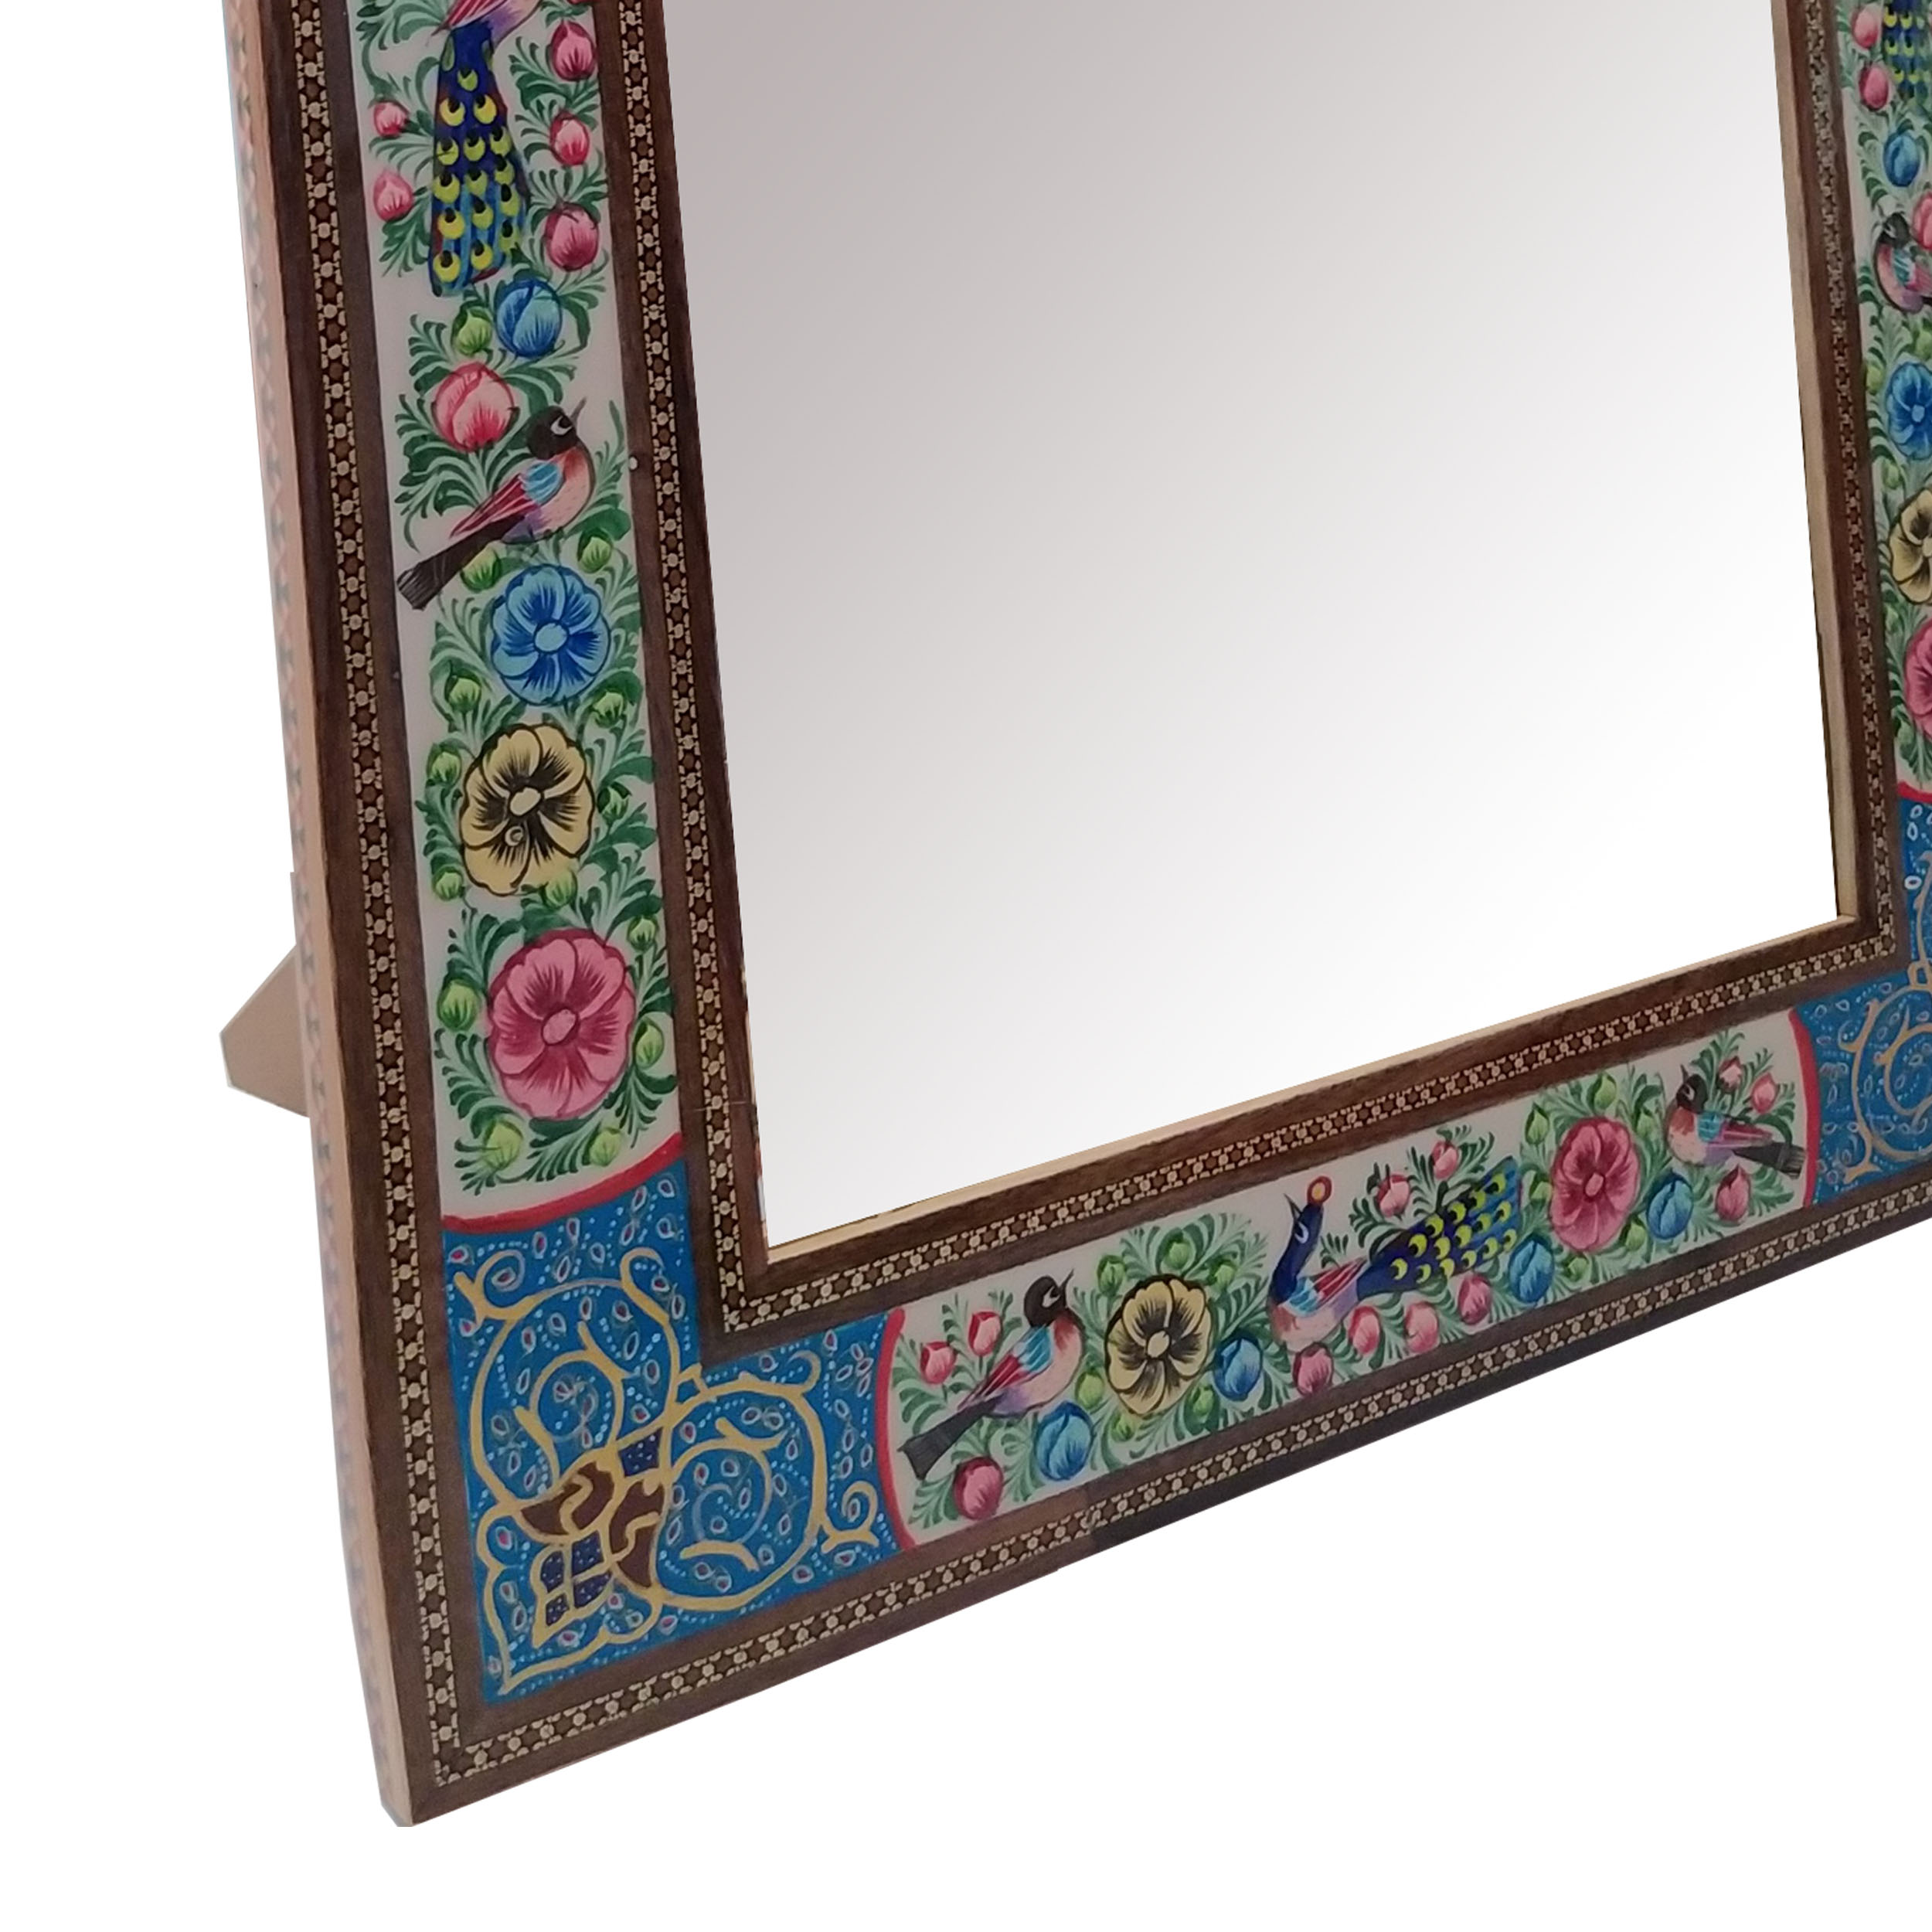 Inlay handicraft mirror frame, code 2330